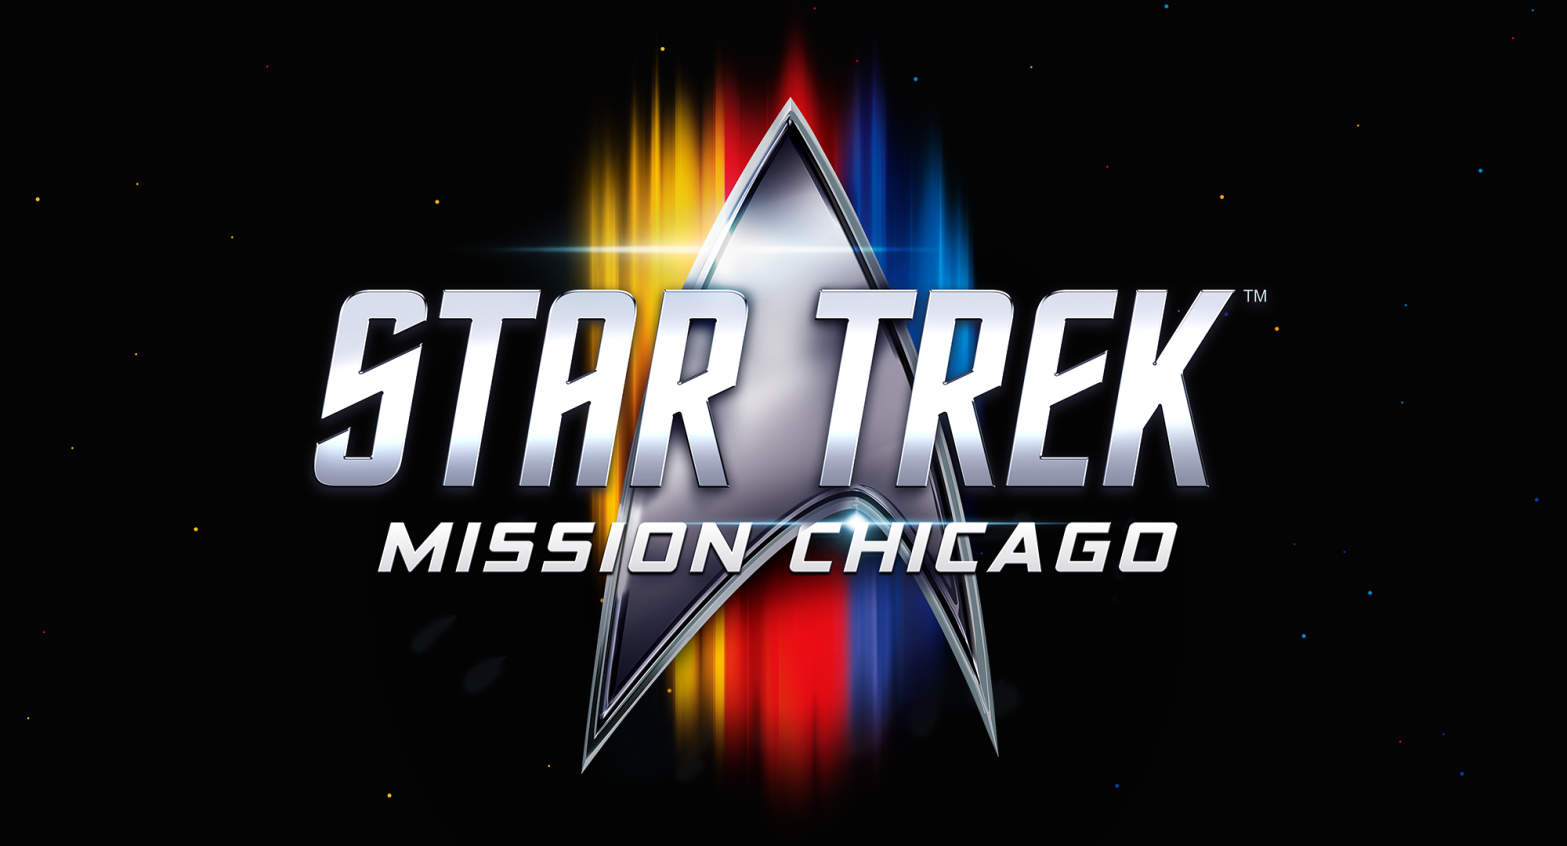 The logo for the new Star Trek convention. (Image: ReedPop)